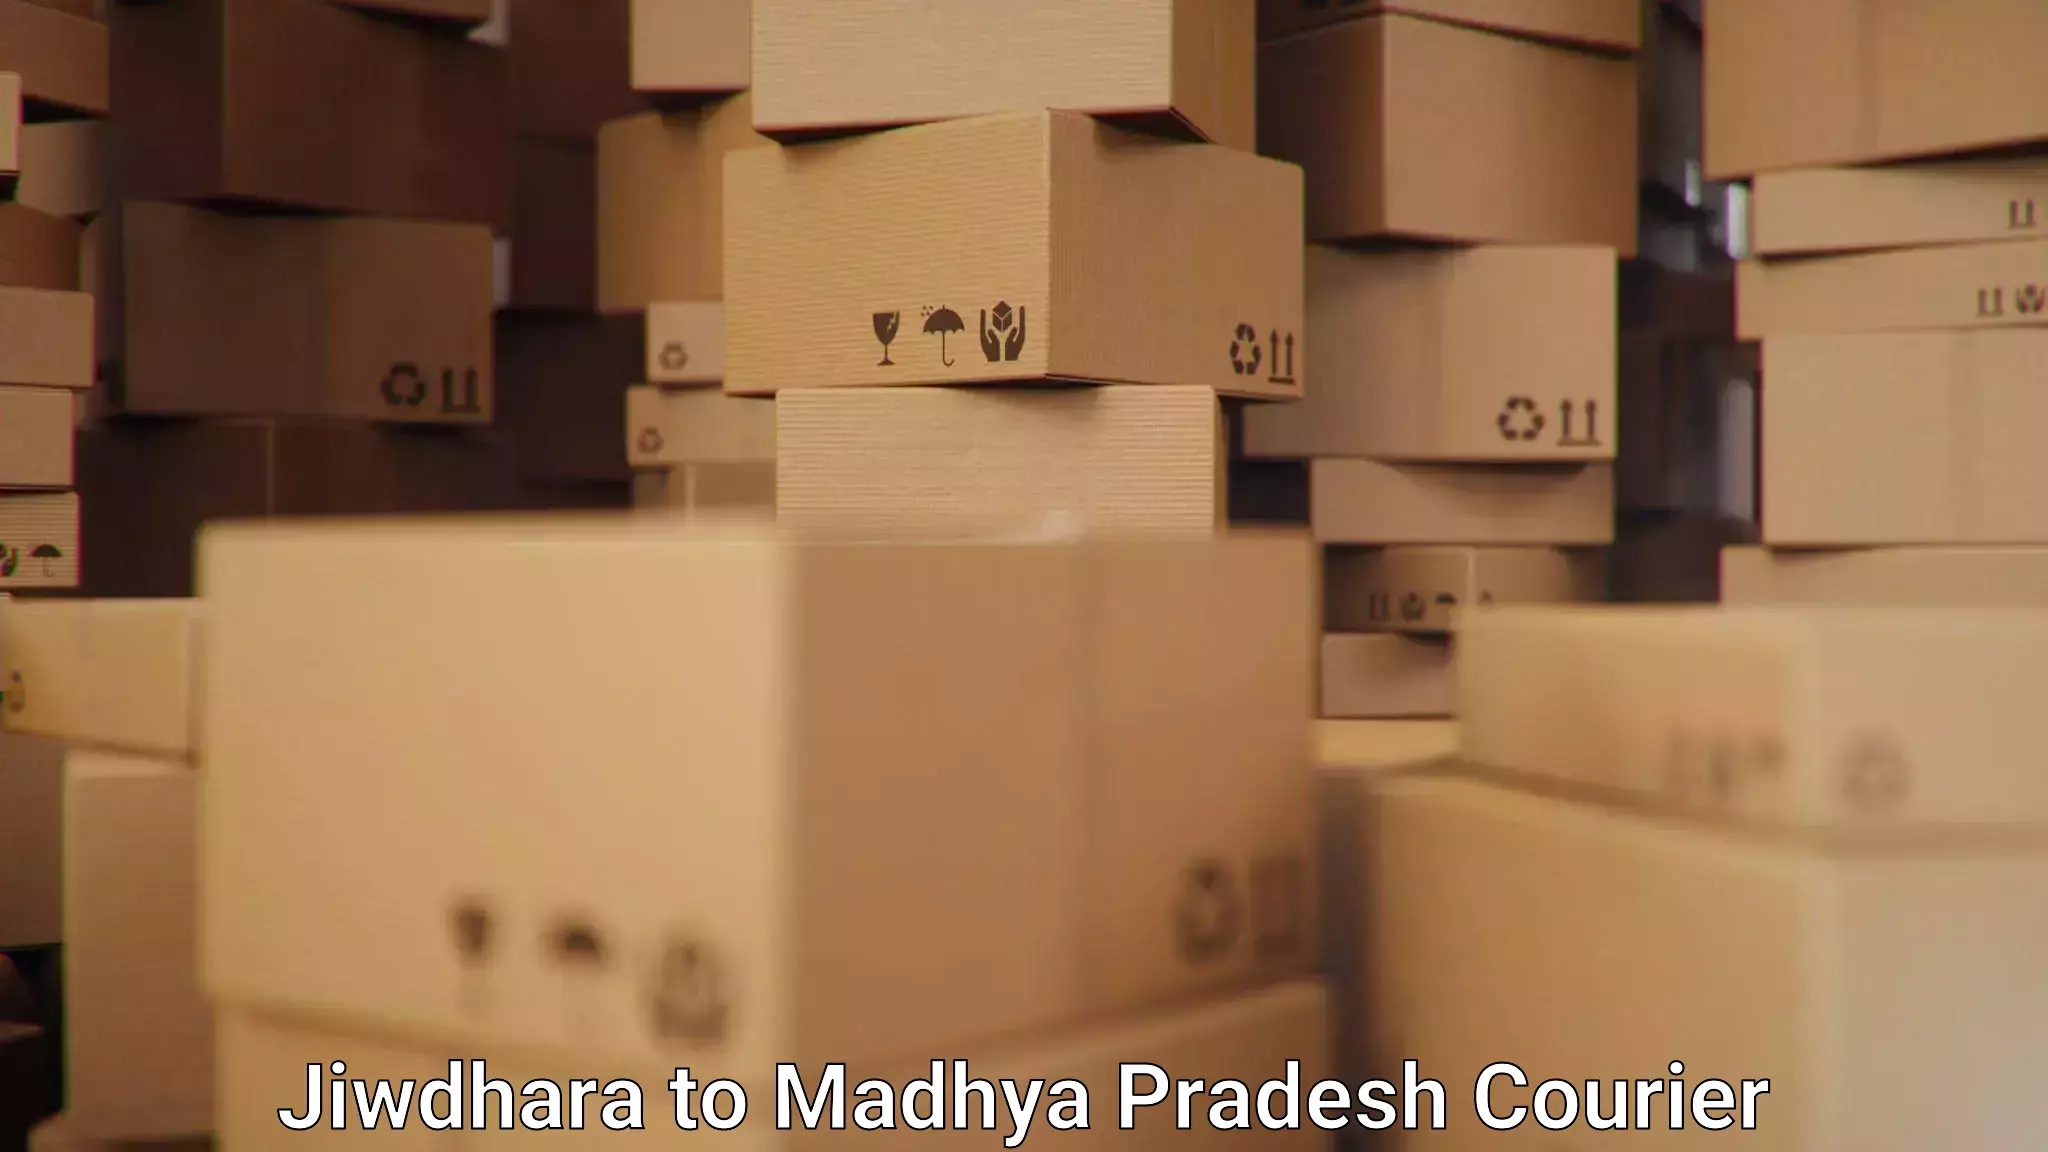 Shipping and handling Jiwdhara to Bina